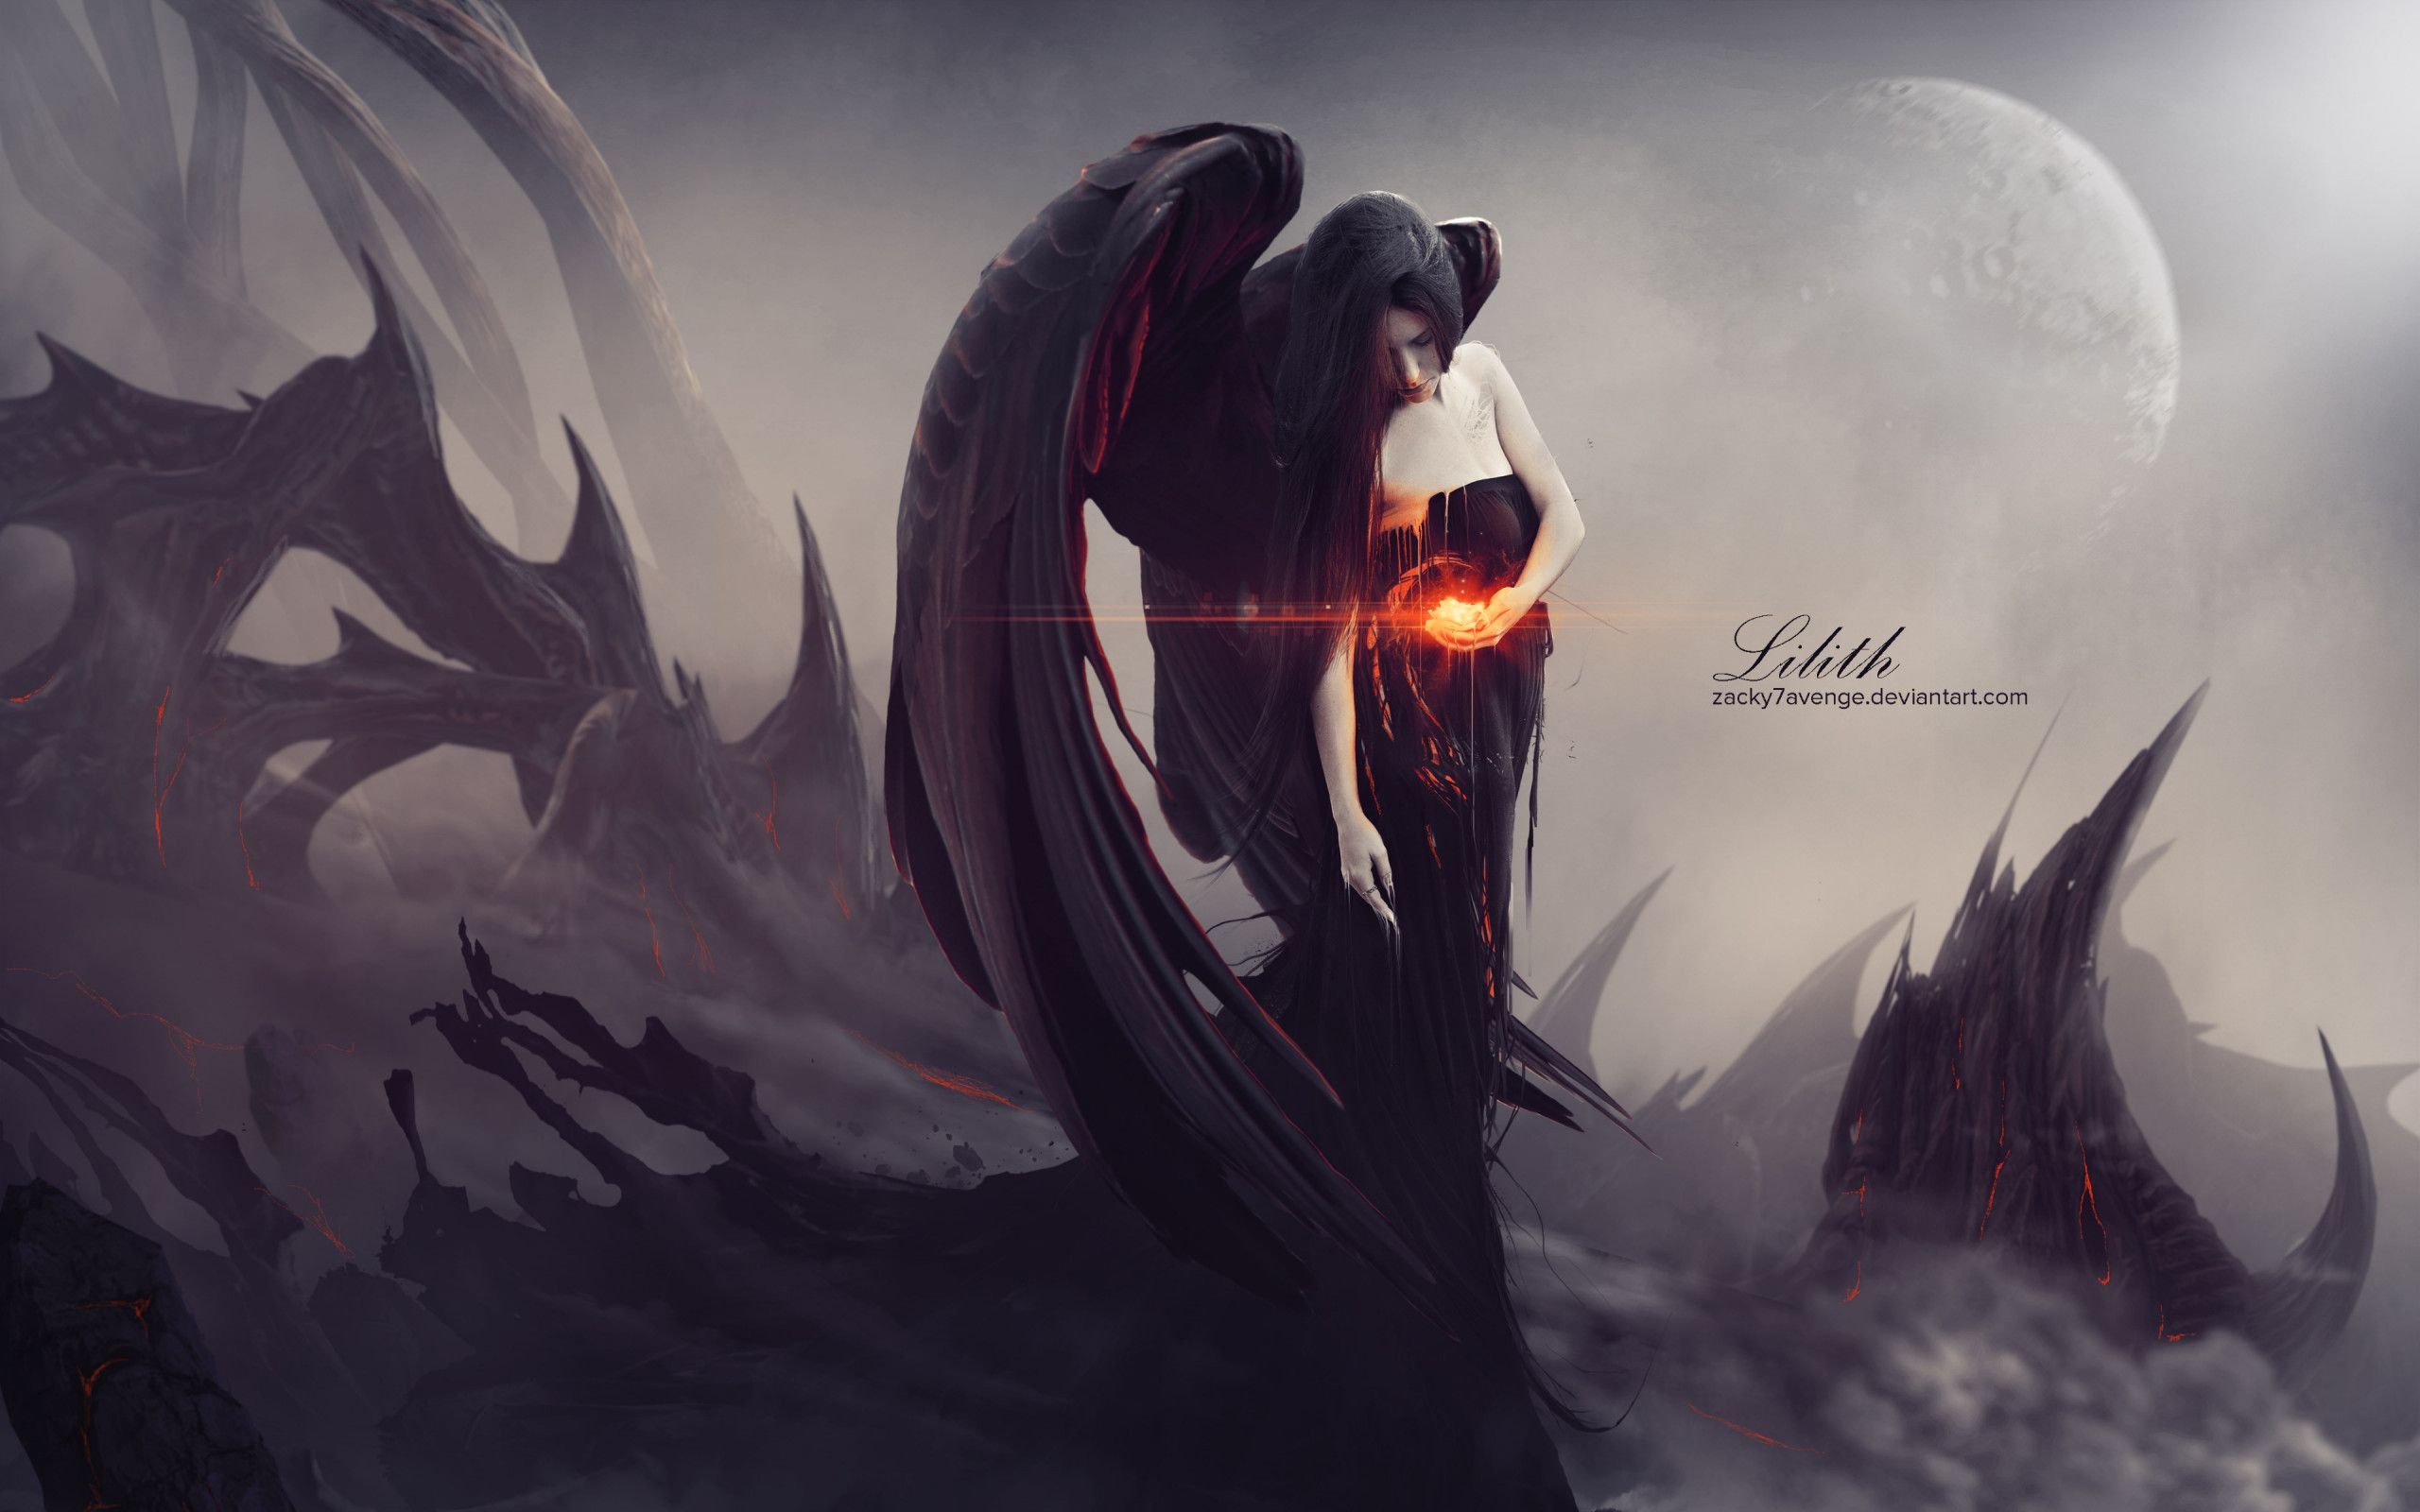 Download wallpaper: Digital art: Lilith 2560x1600